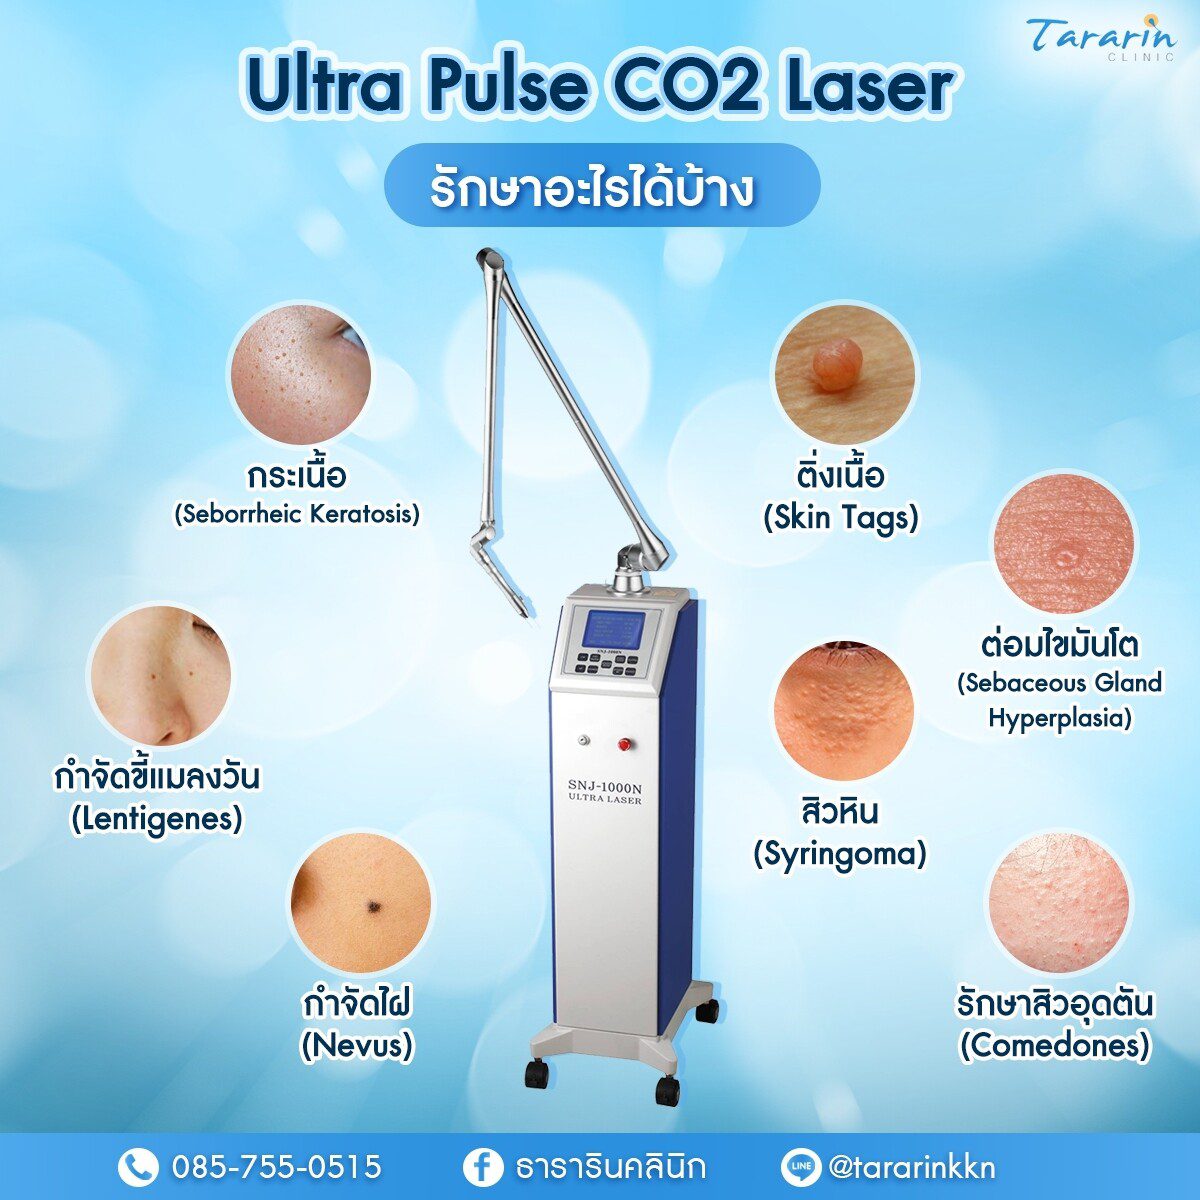 Ultra Pulse CO2 Laser รักษาอะไรได้บ้าง ?